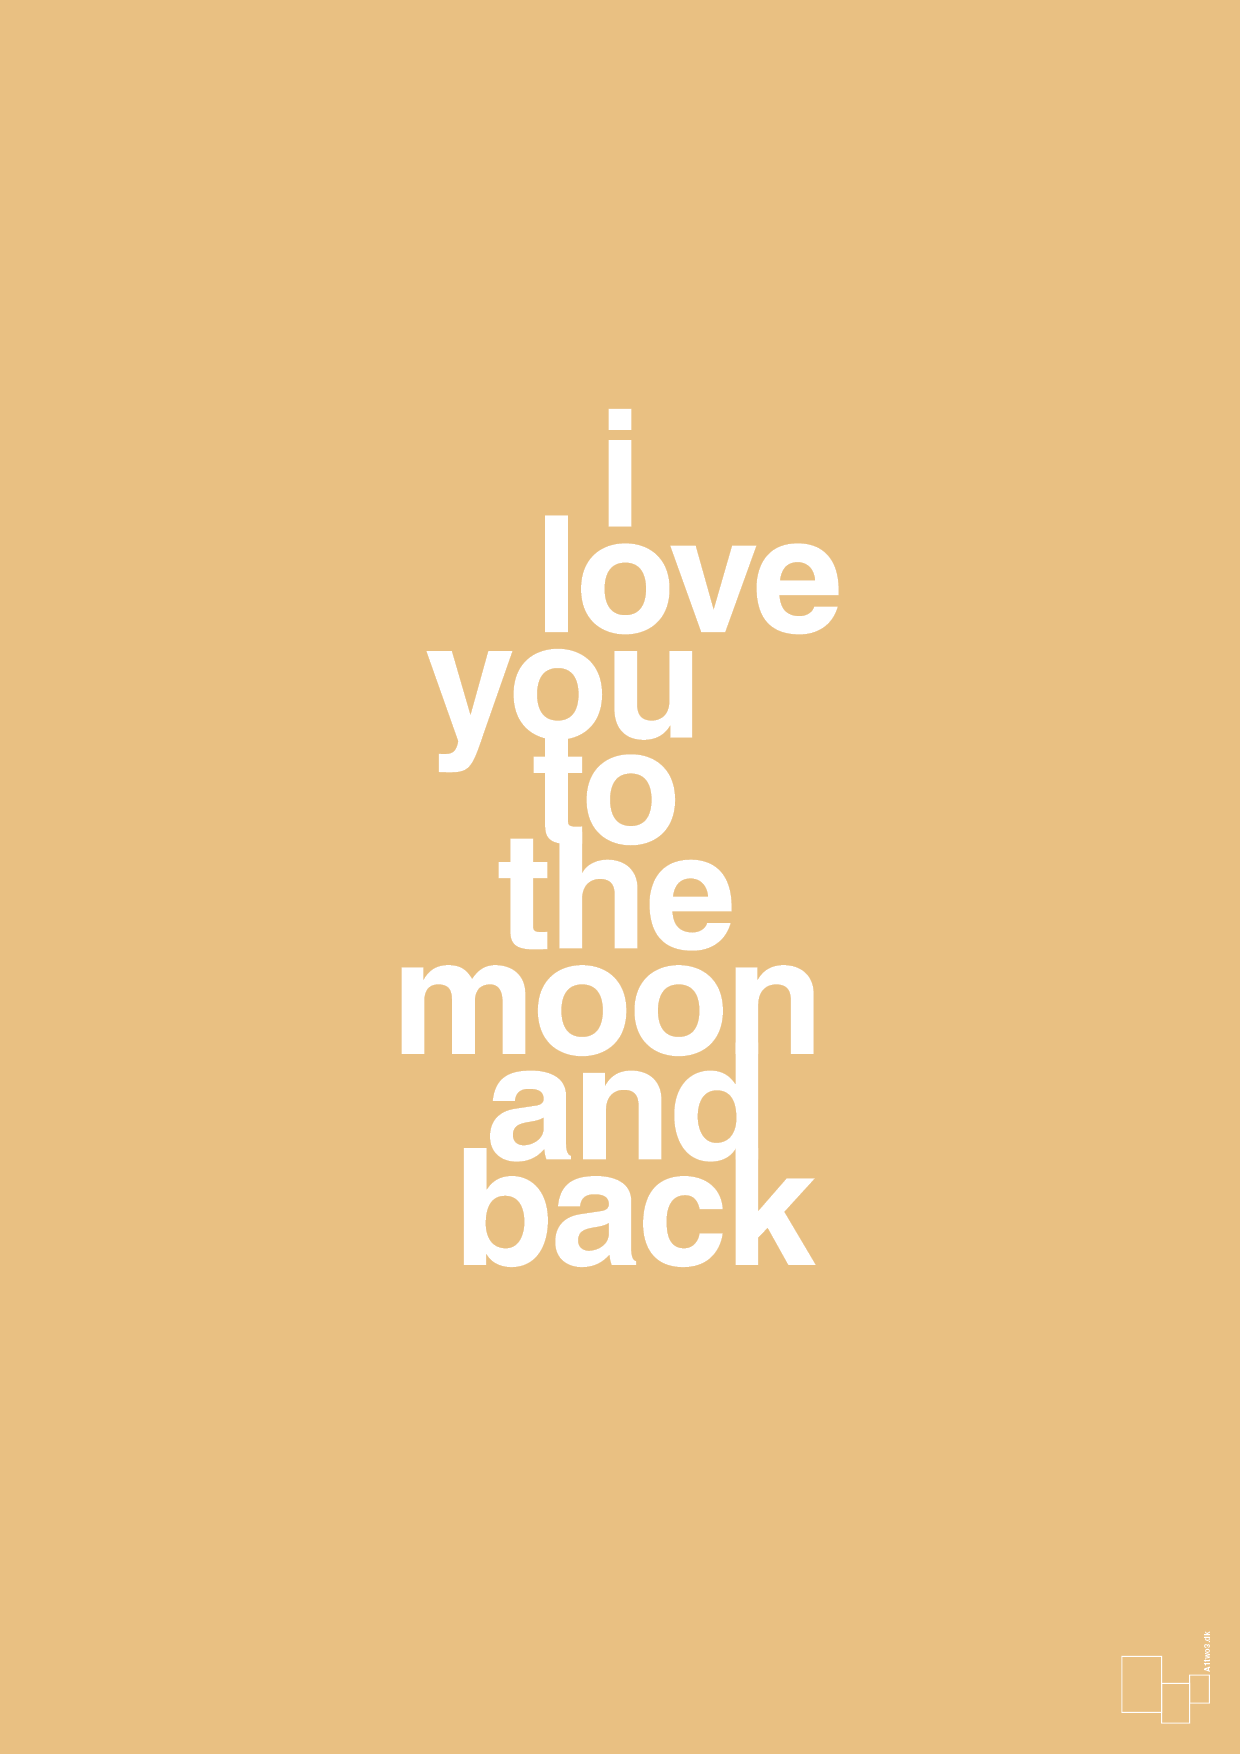 i love you to the moon and back - Plakat med Ordsprog i Charismatic